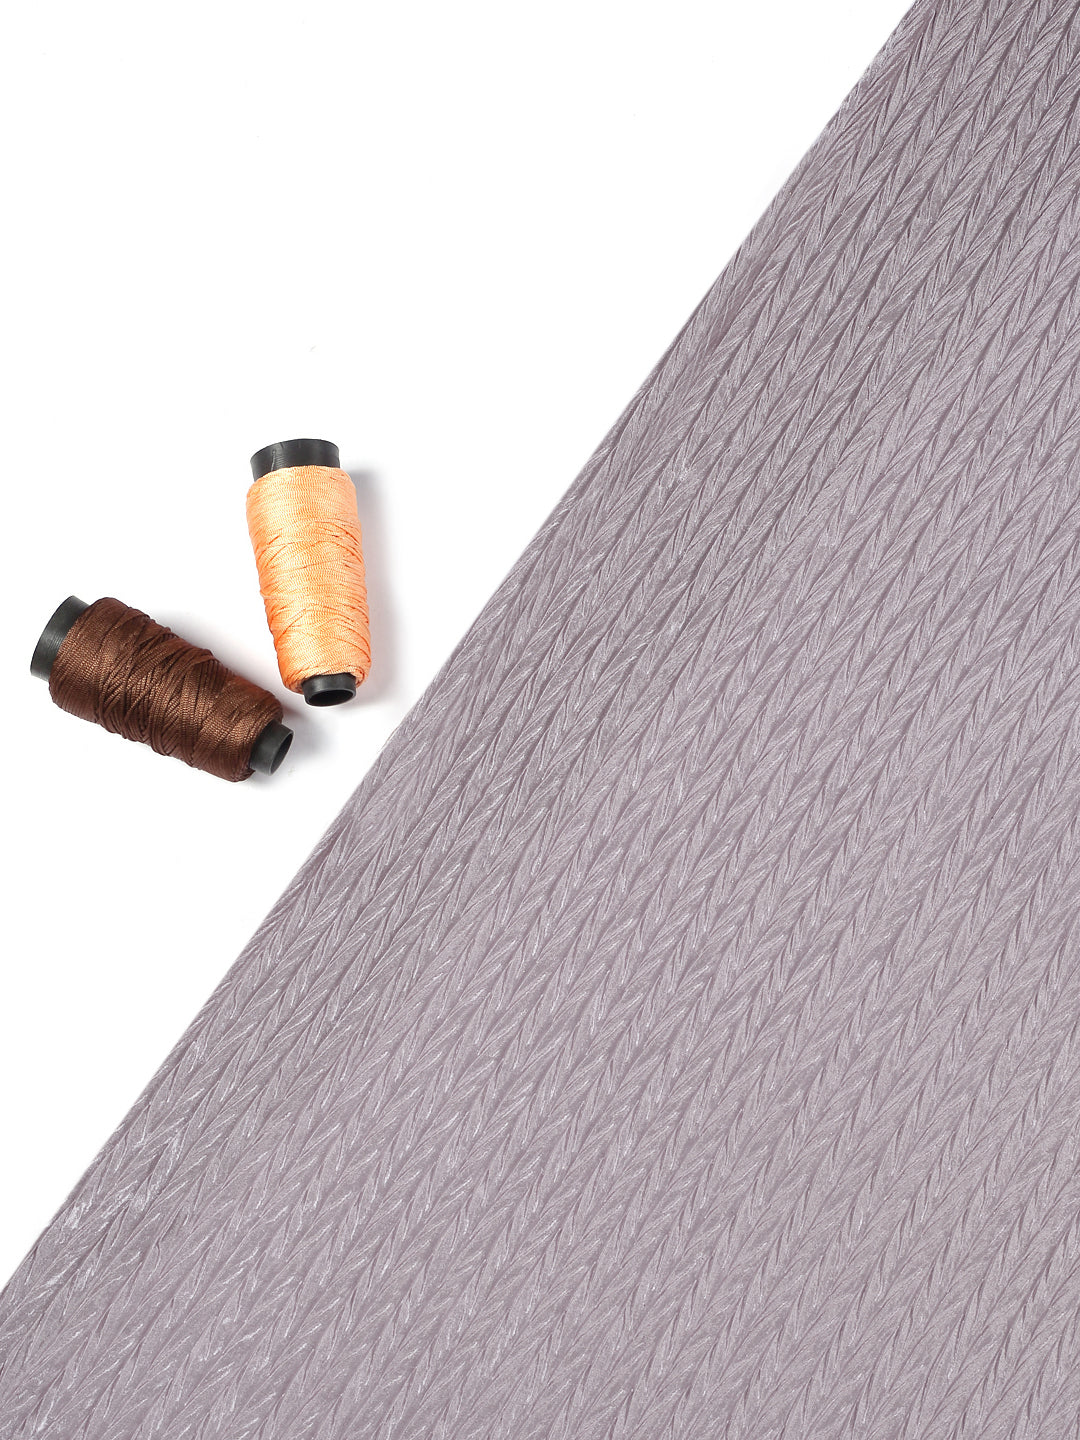 Mauve Imported Satin Wrinkled Fabric